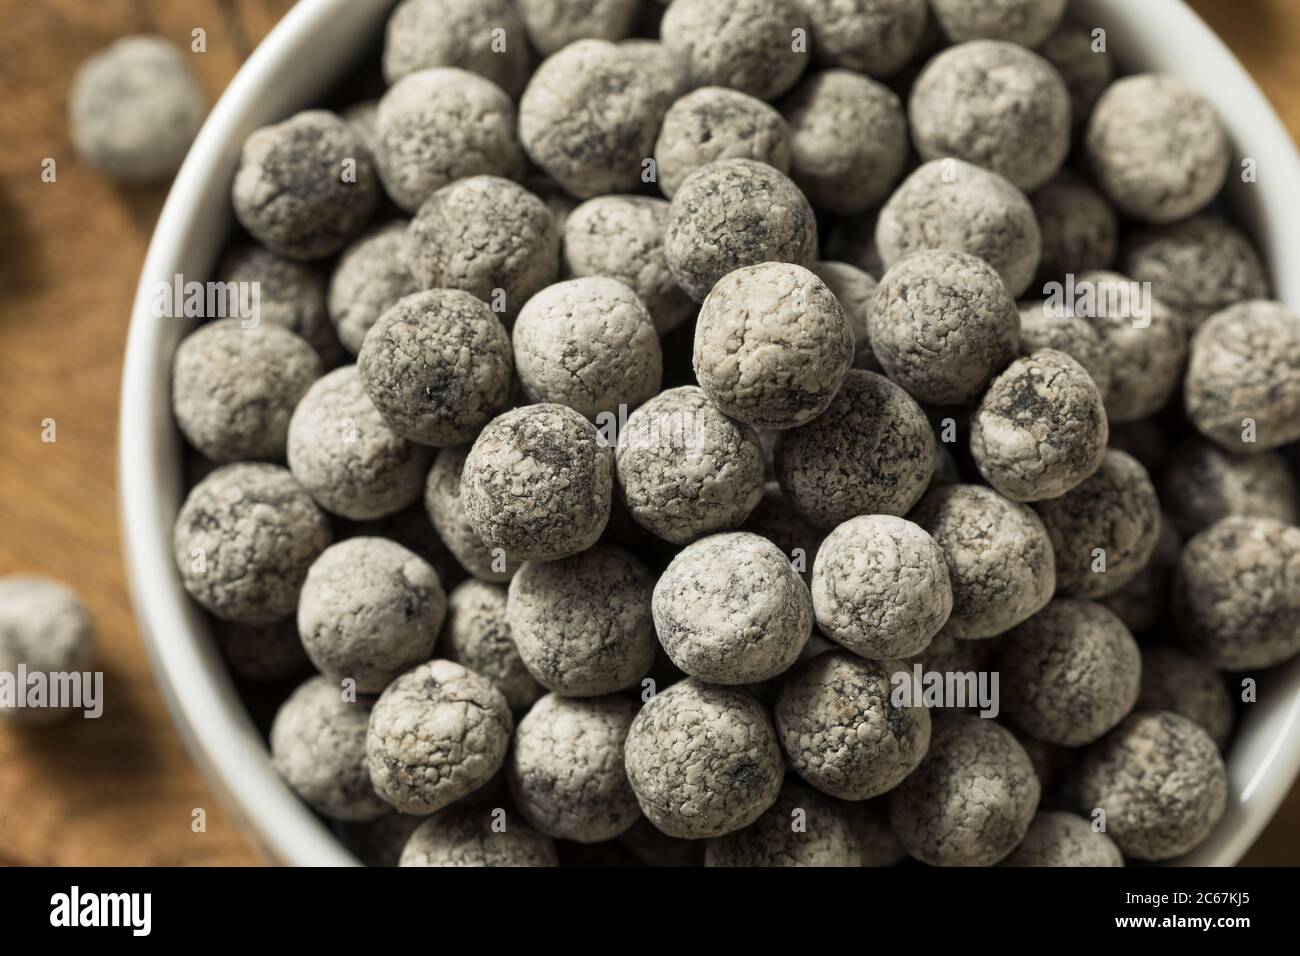 Raw Dry Organic Tapioca Pearl Balls in a Bowl Stock Photo